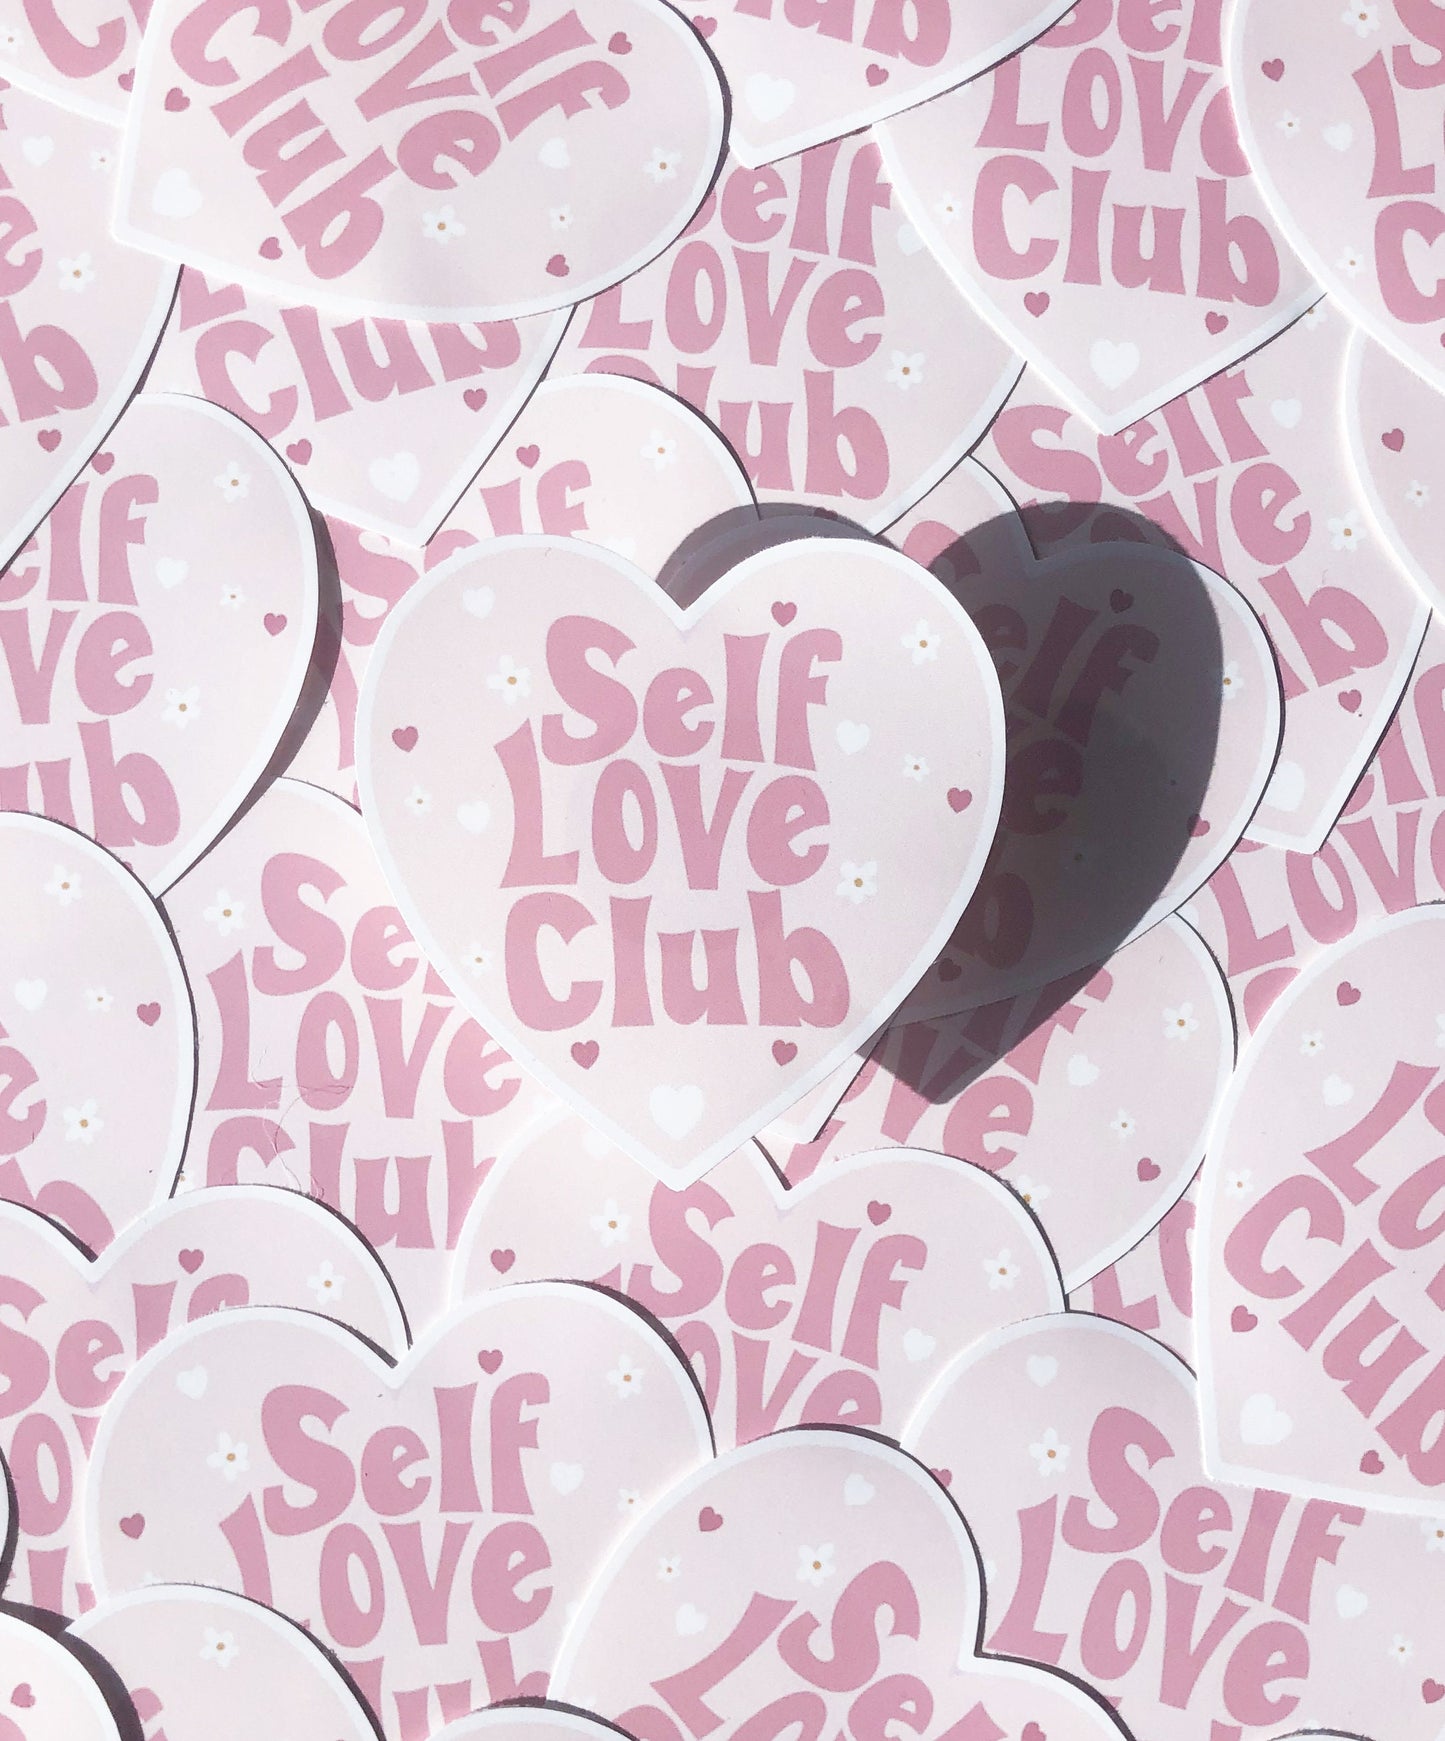 Vinyl Self Love Club Sticker